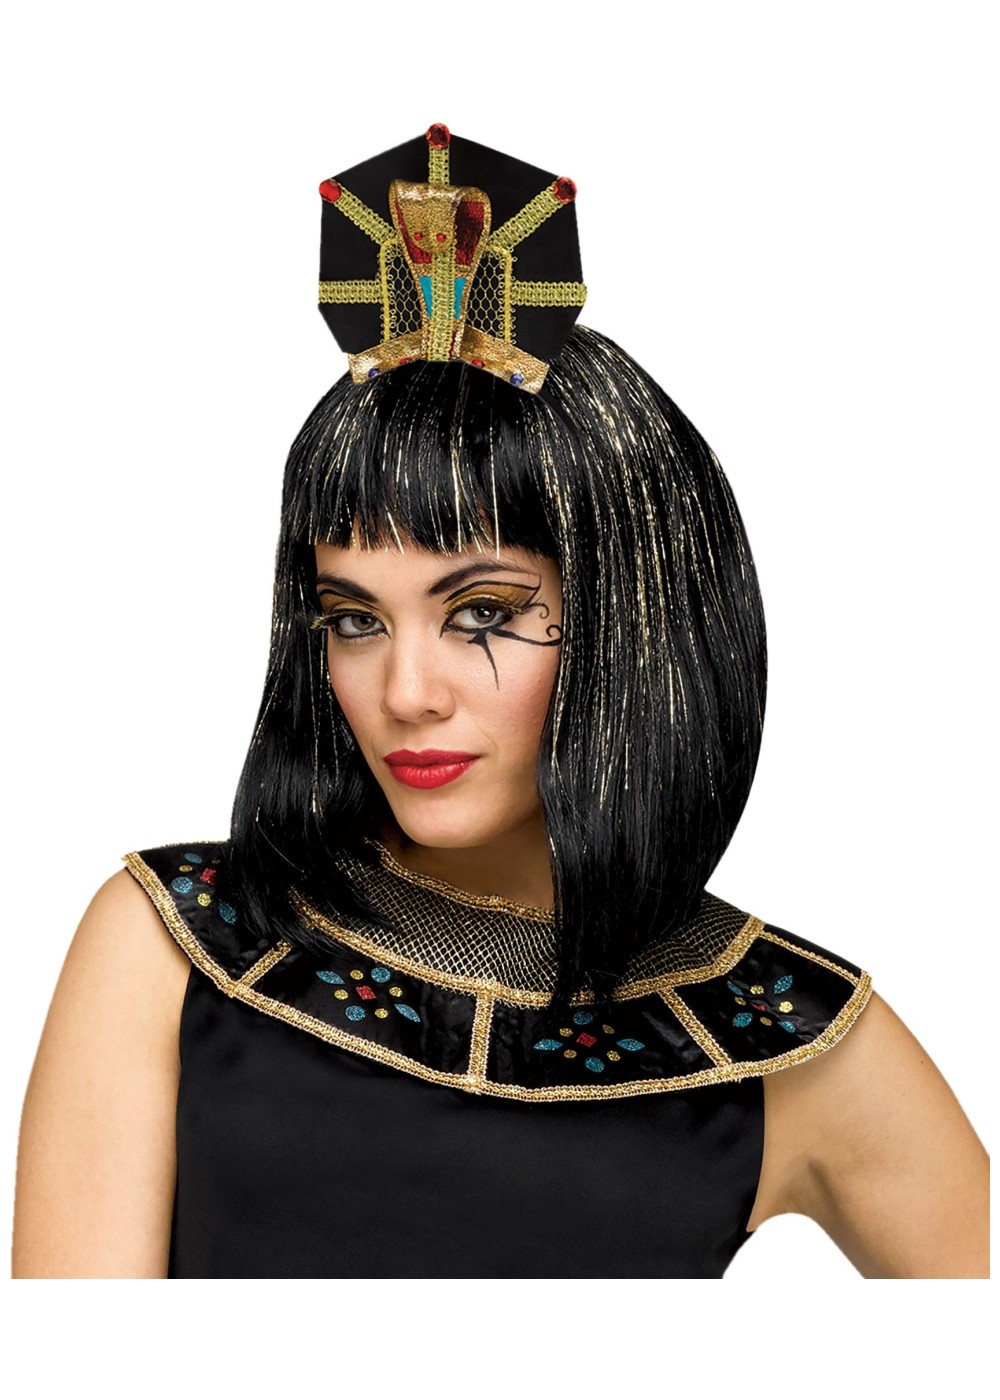 Egyptian Women Costume Headpiece